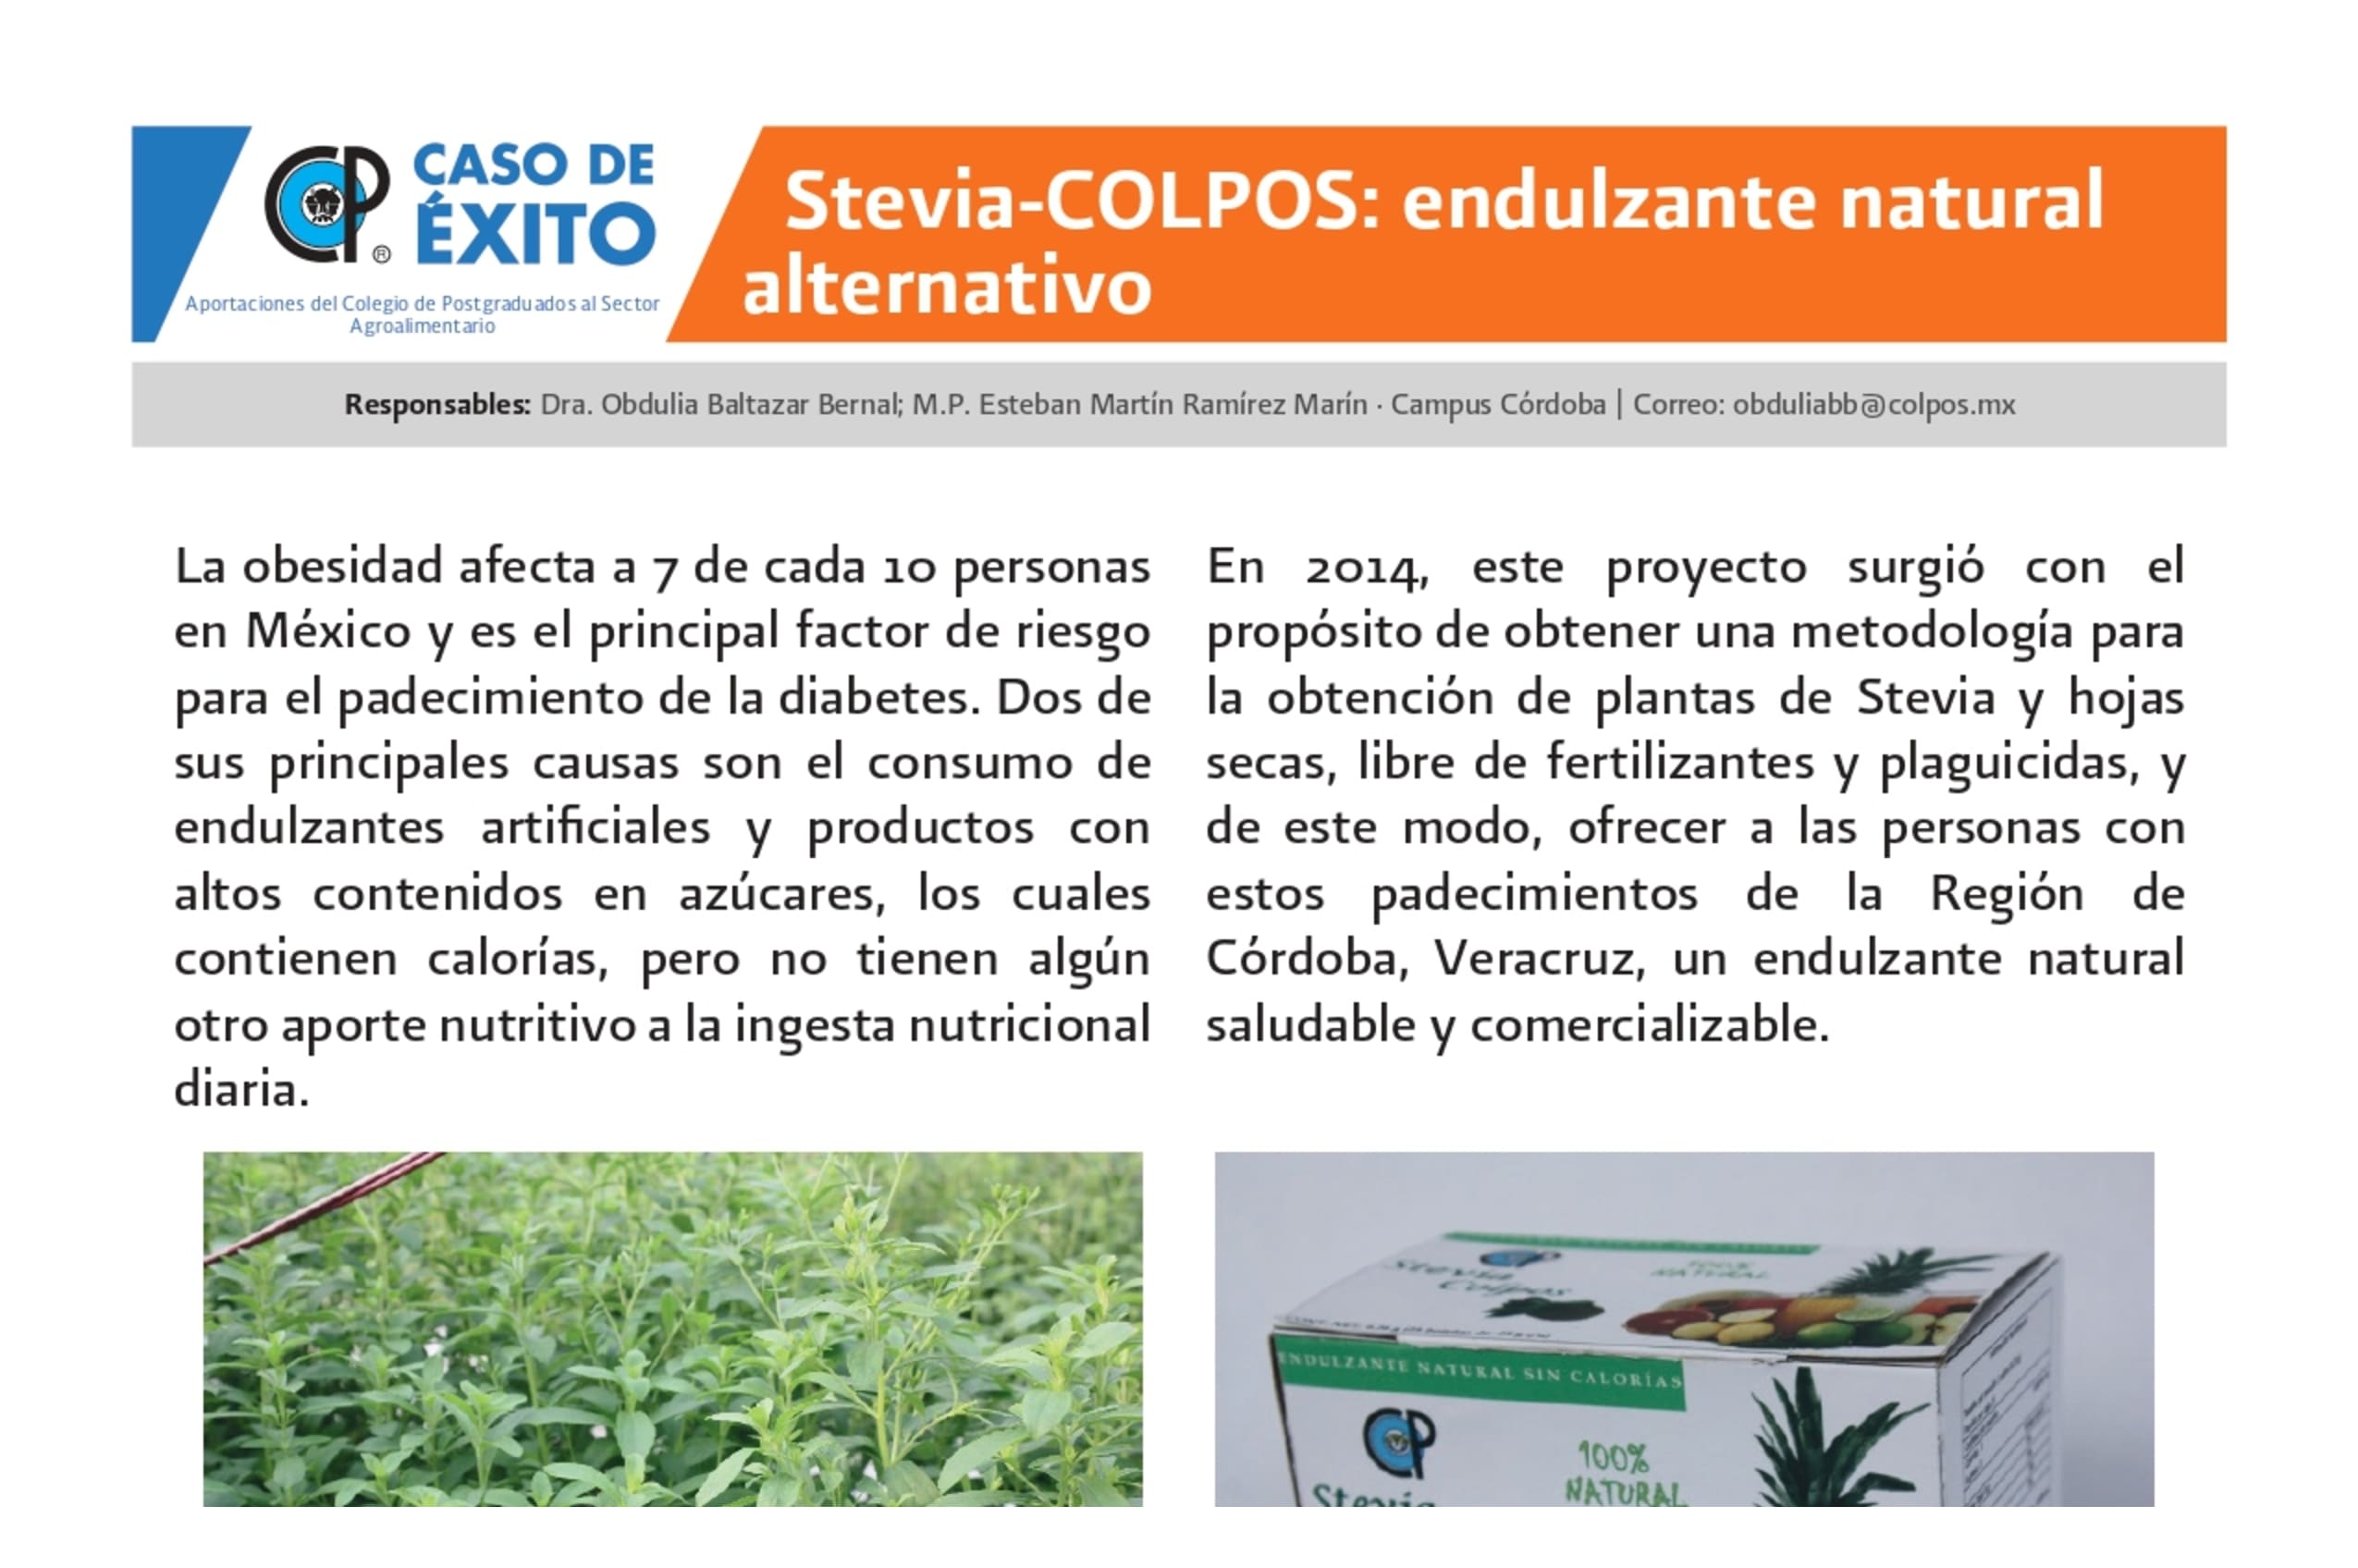 Stevia-COLPOS: endulzan natural alternativo.